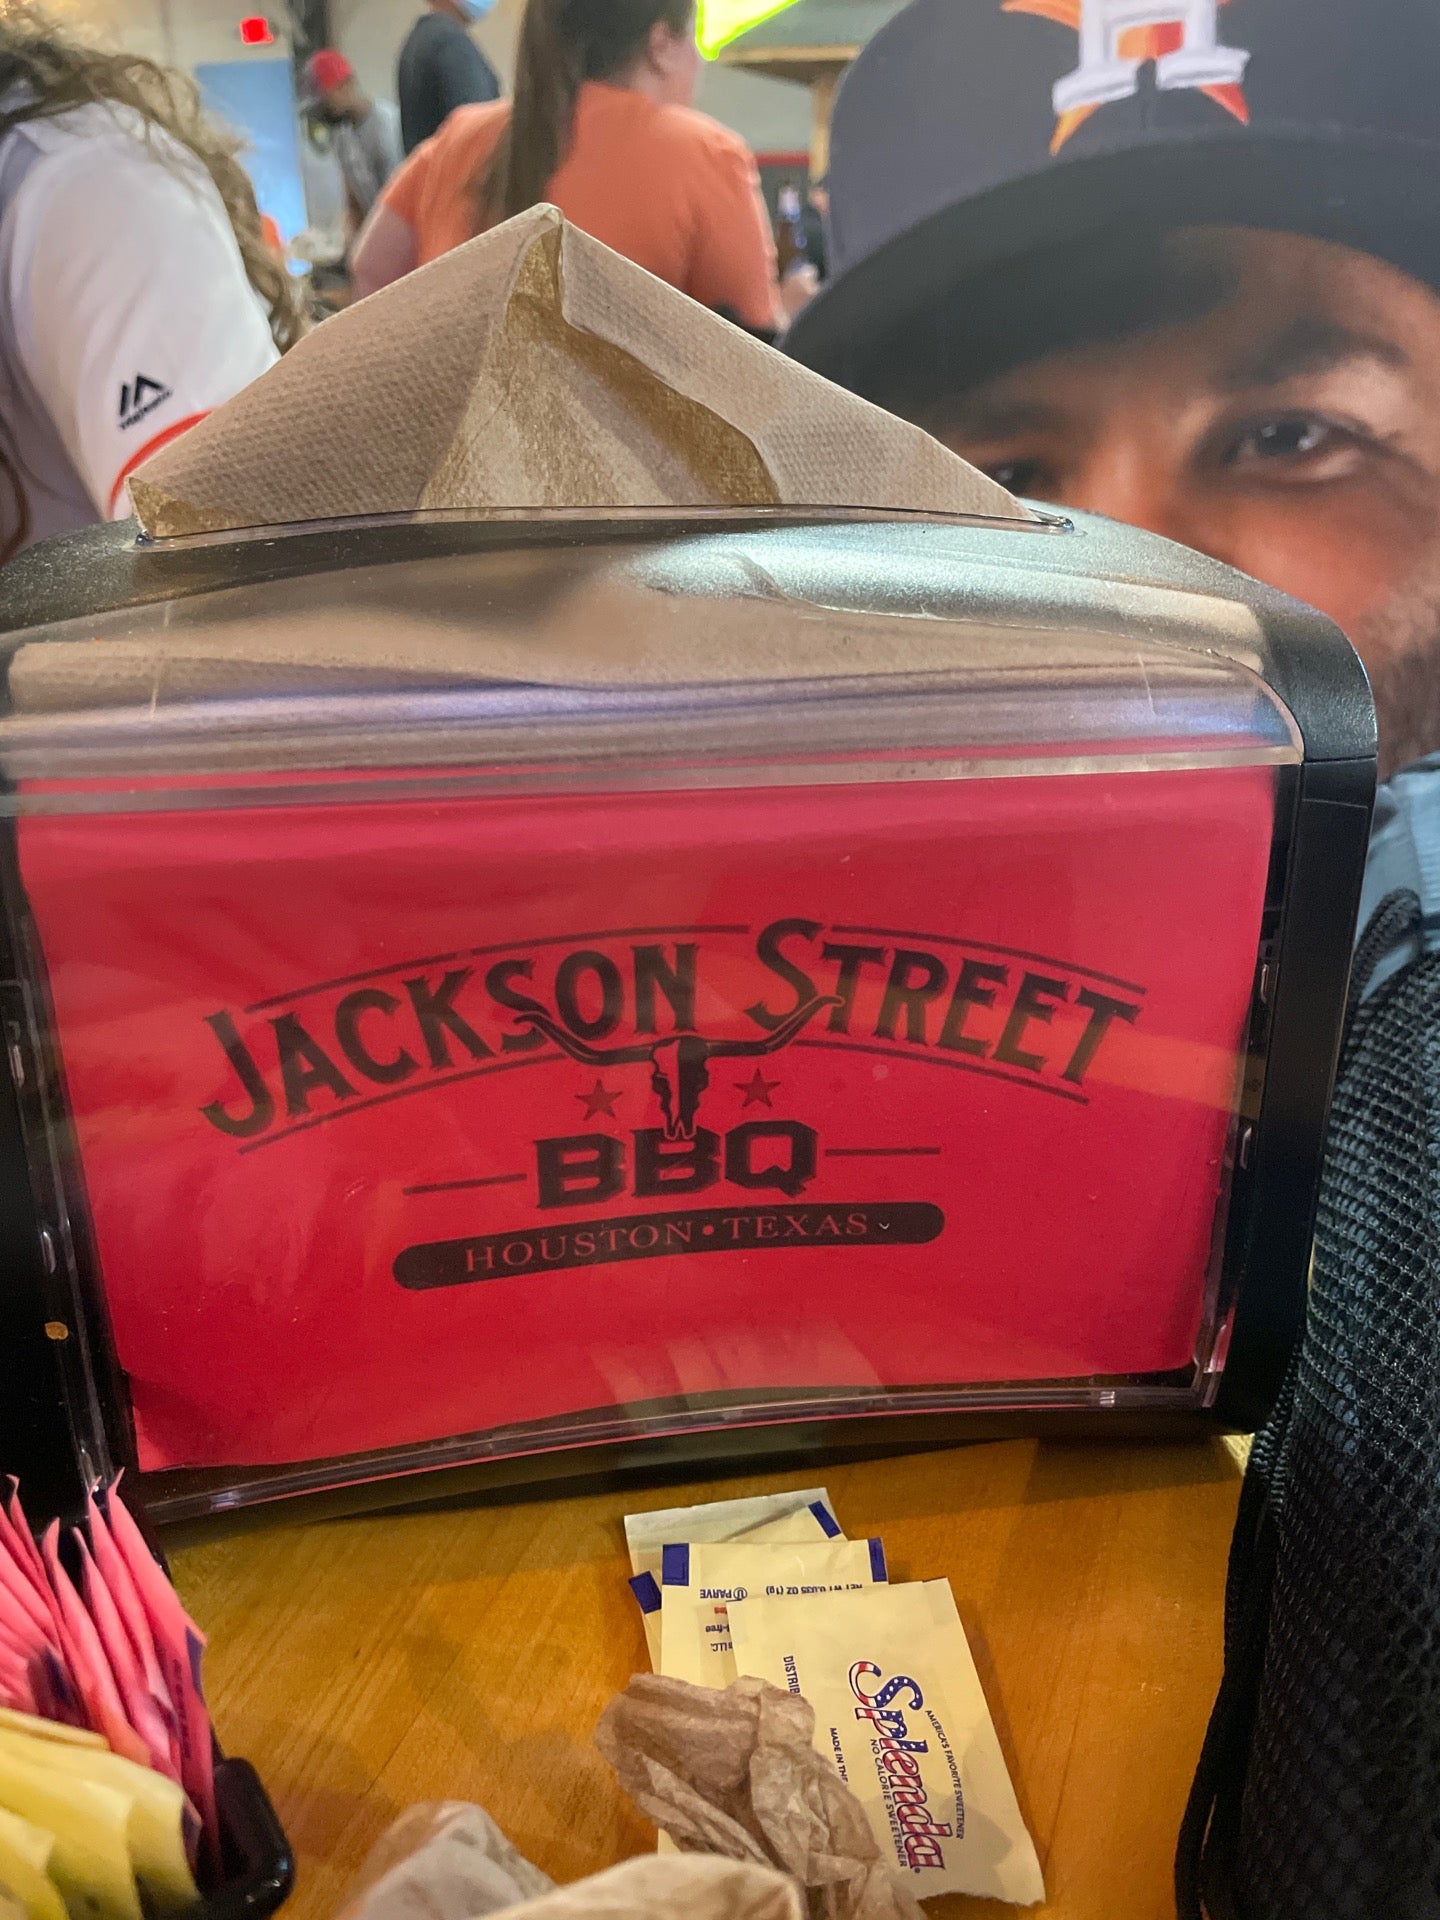 Jackson Street BBQ